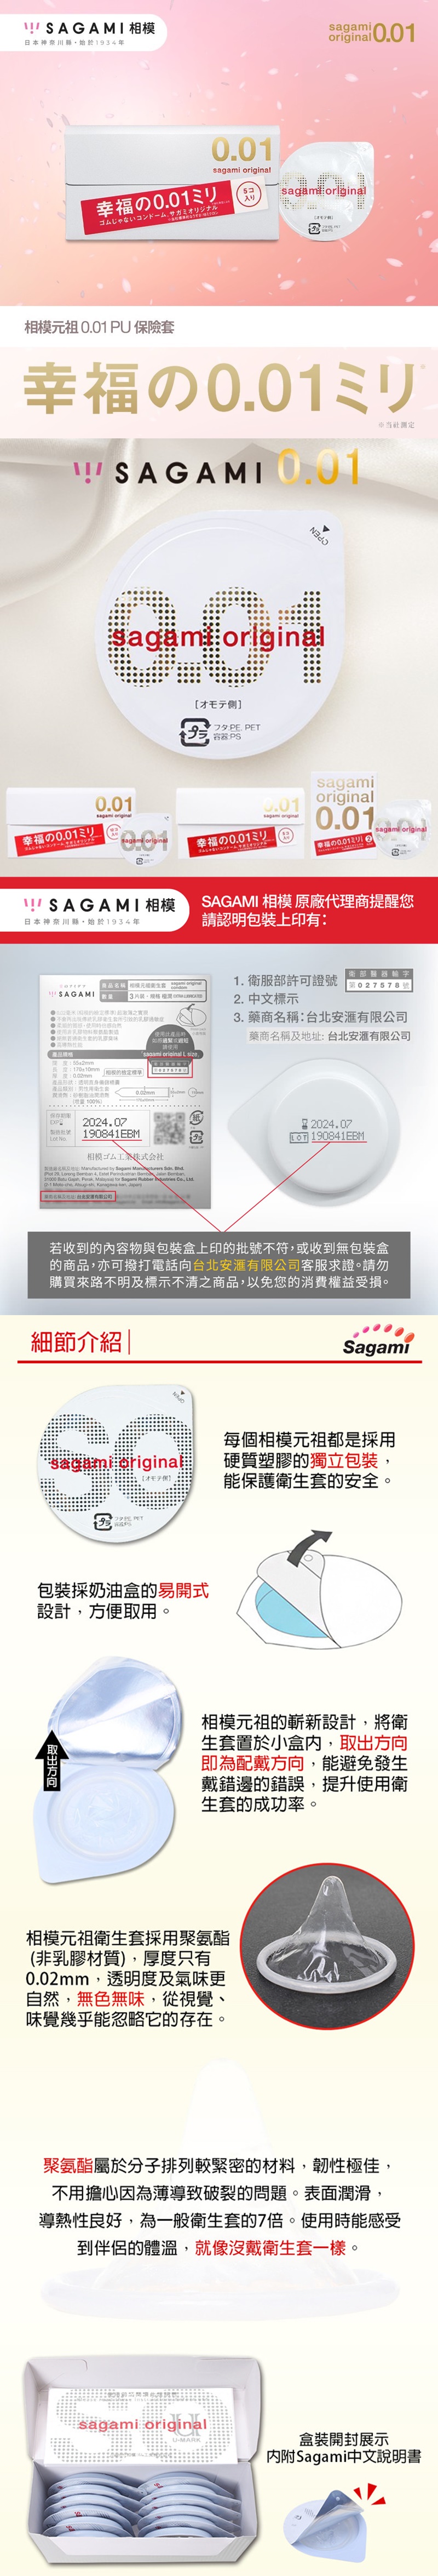 sagami 相模元祖 001 極致薄 55mm 保險套 12入裝 長條圖 800X800.jpg